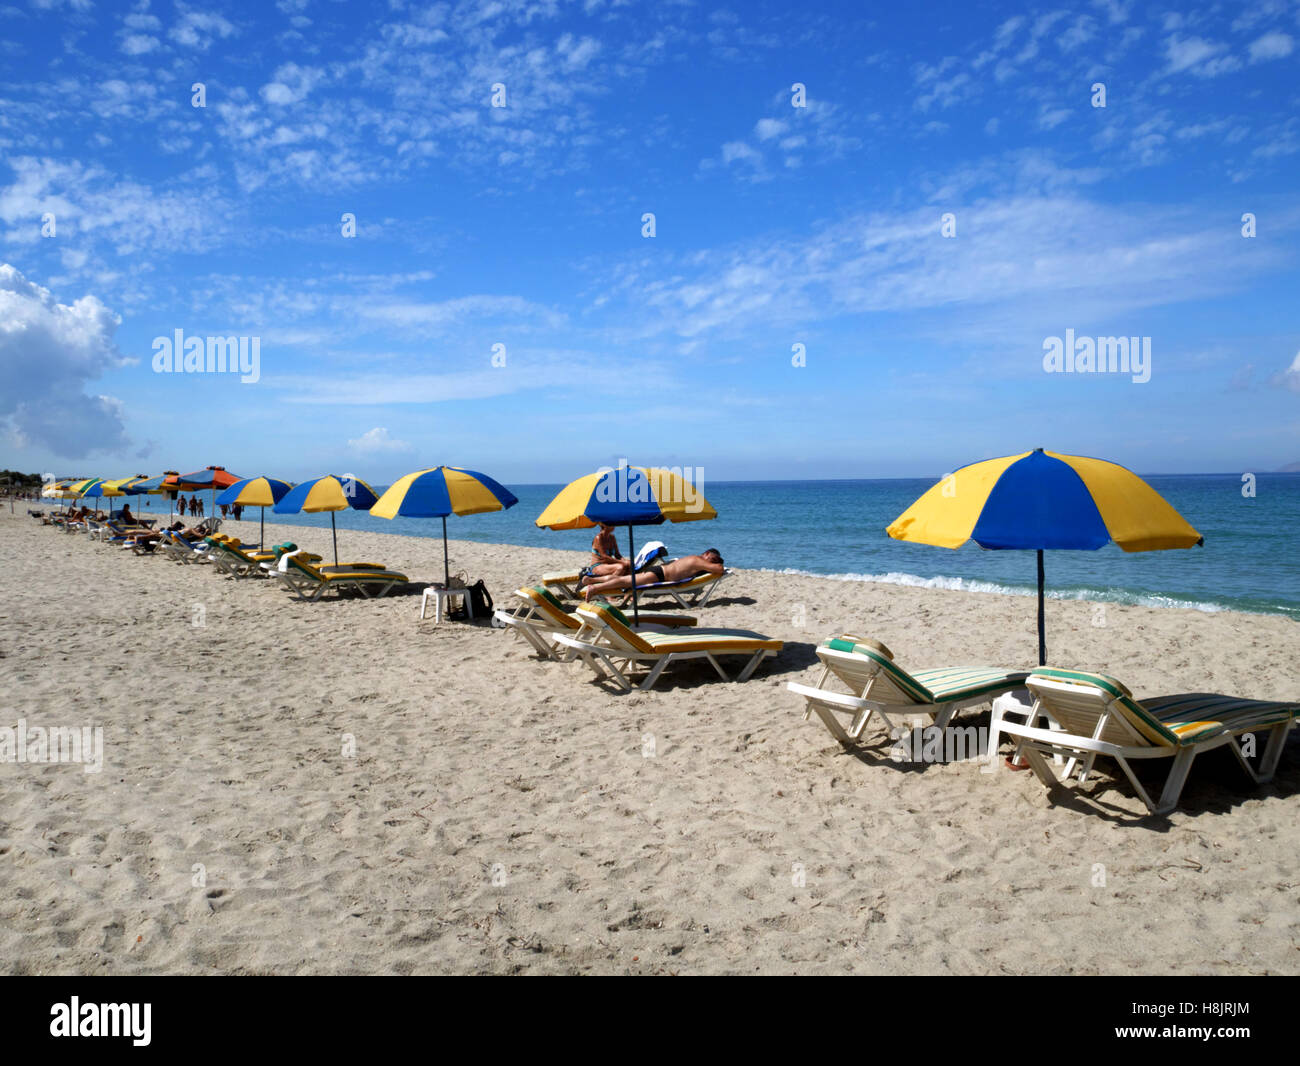 Limnara beach, Marmari, Kos, Greece. Stock Photo